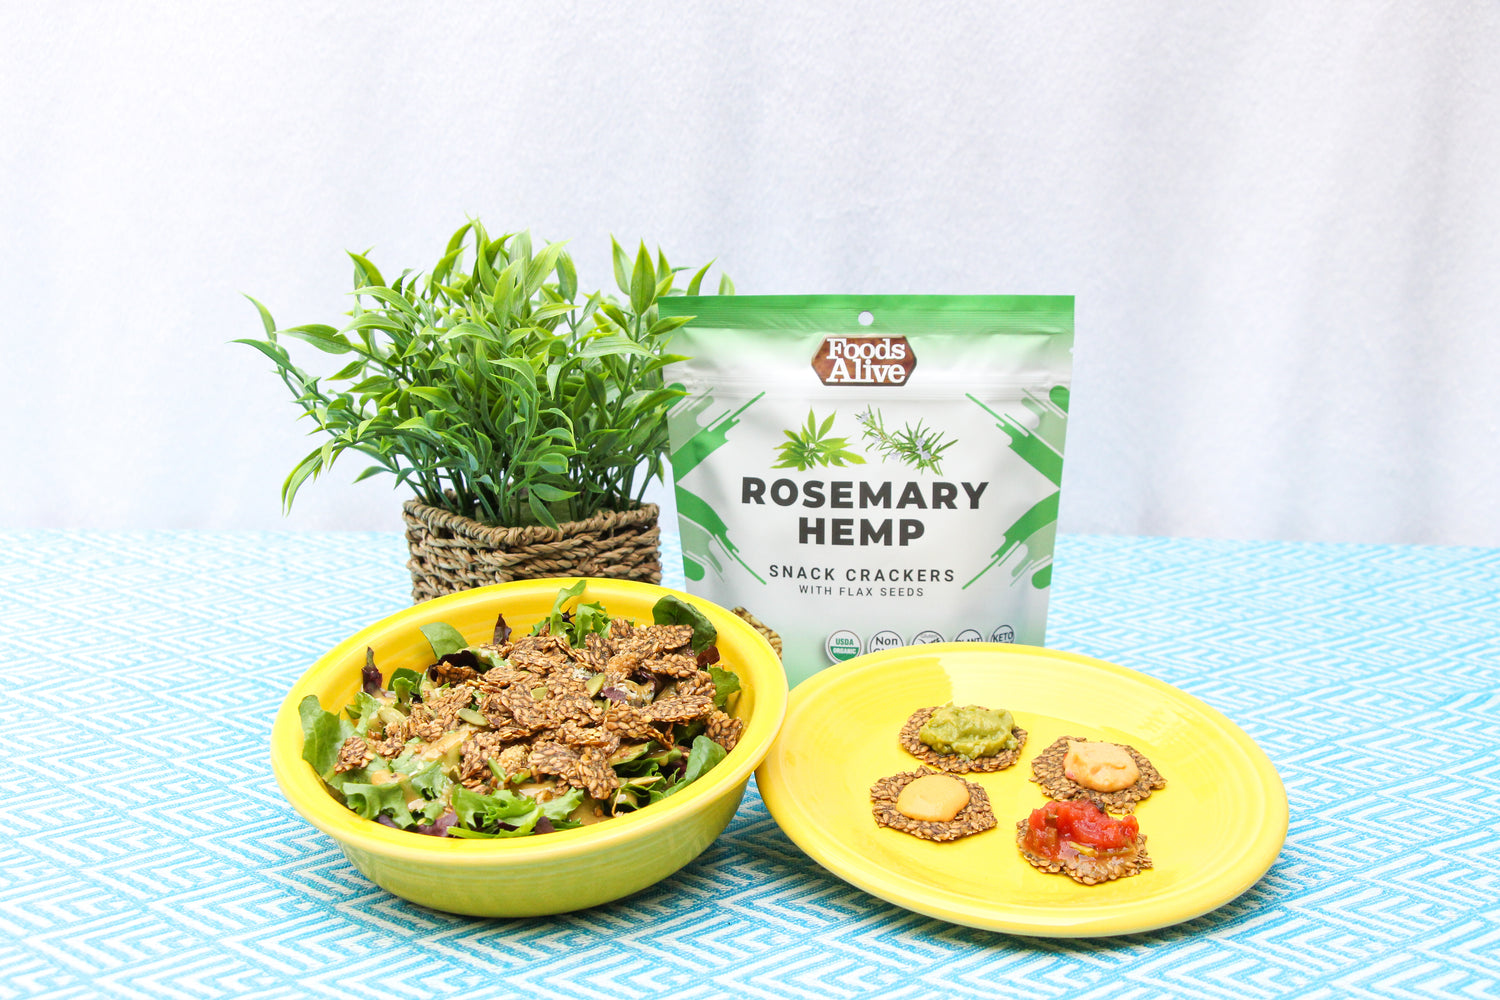 Foods Alive Organic Rosemary Hemp Crackers